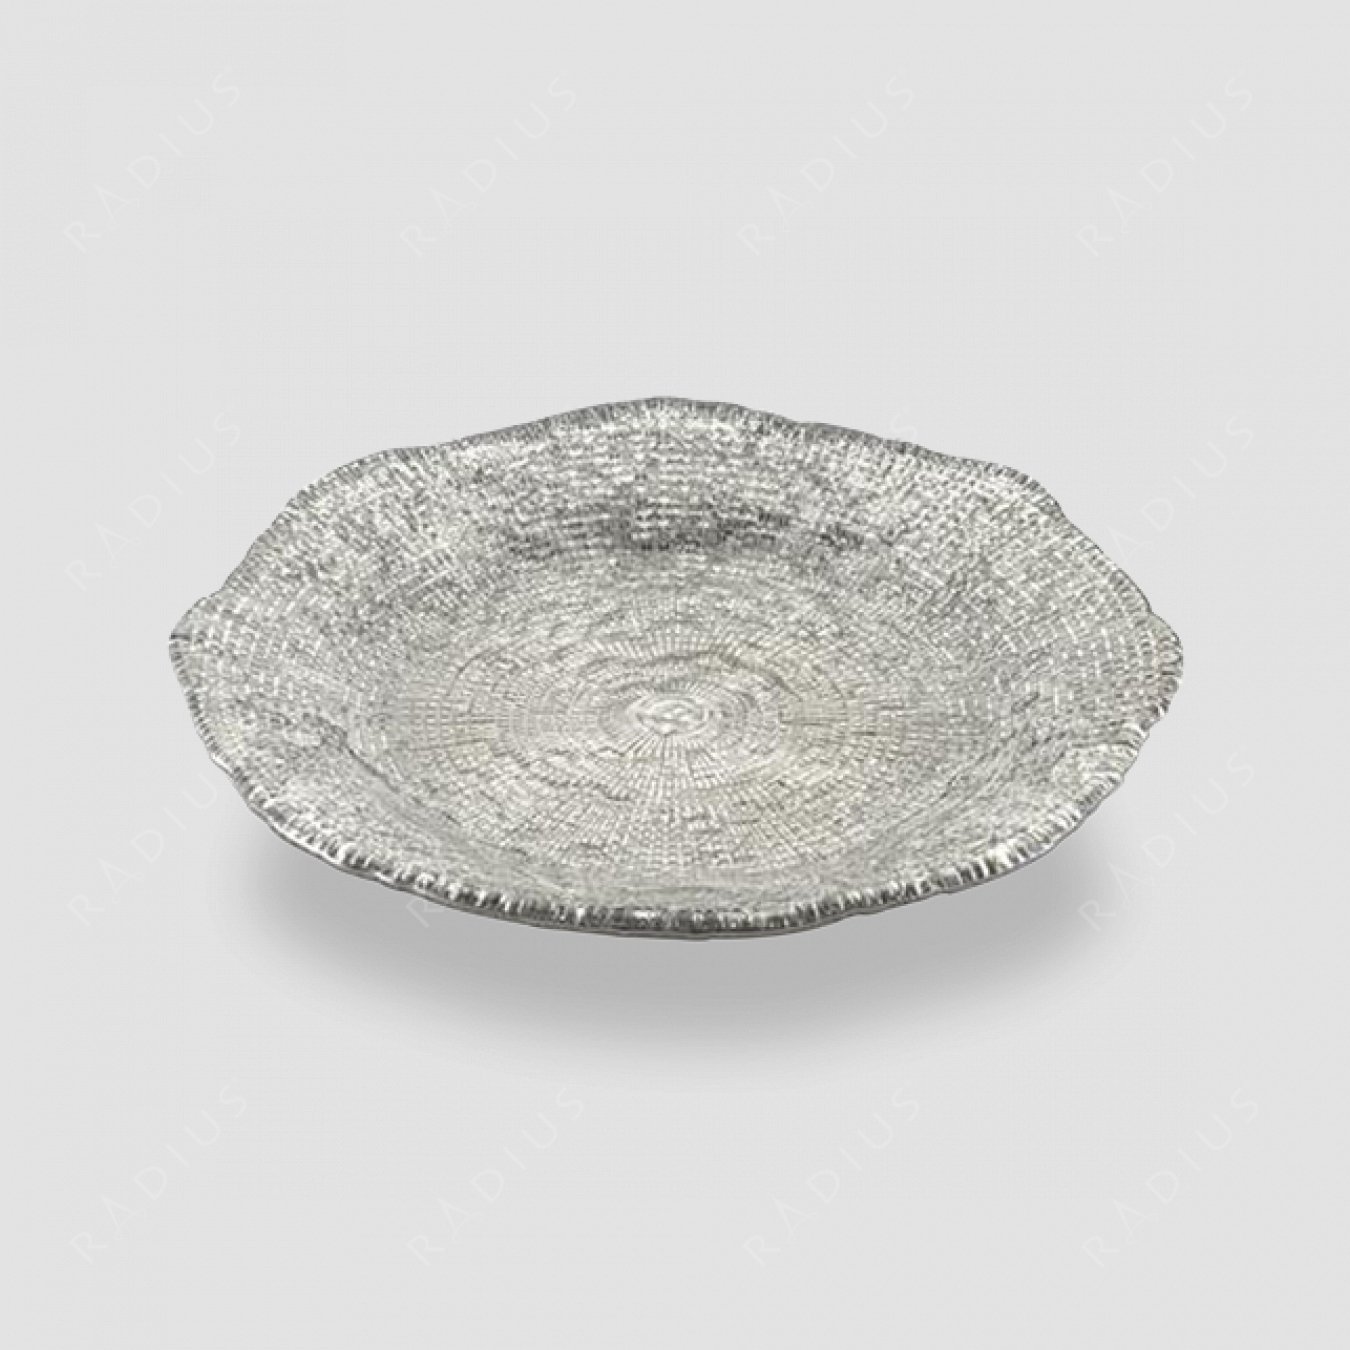 Тарелка десертная 18 см, бежевая/хром, серия Diamante, IVV, Италия